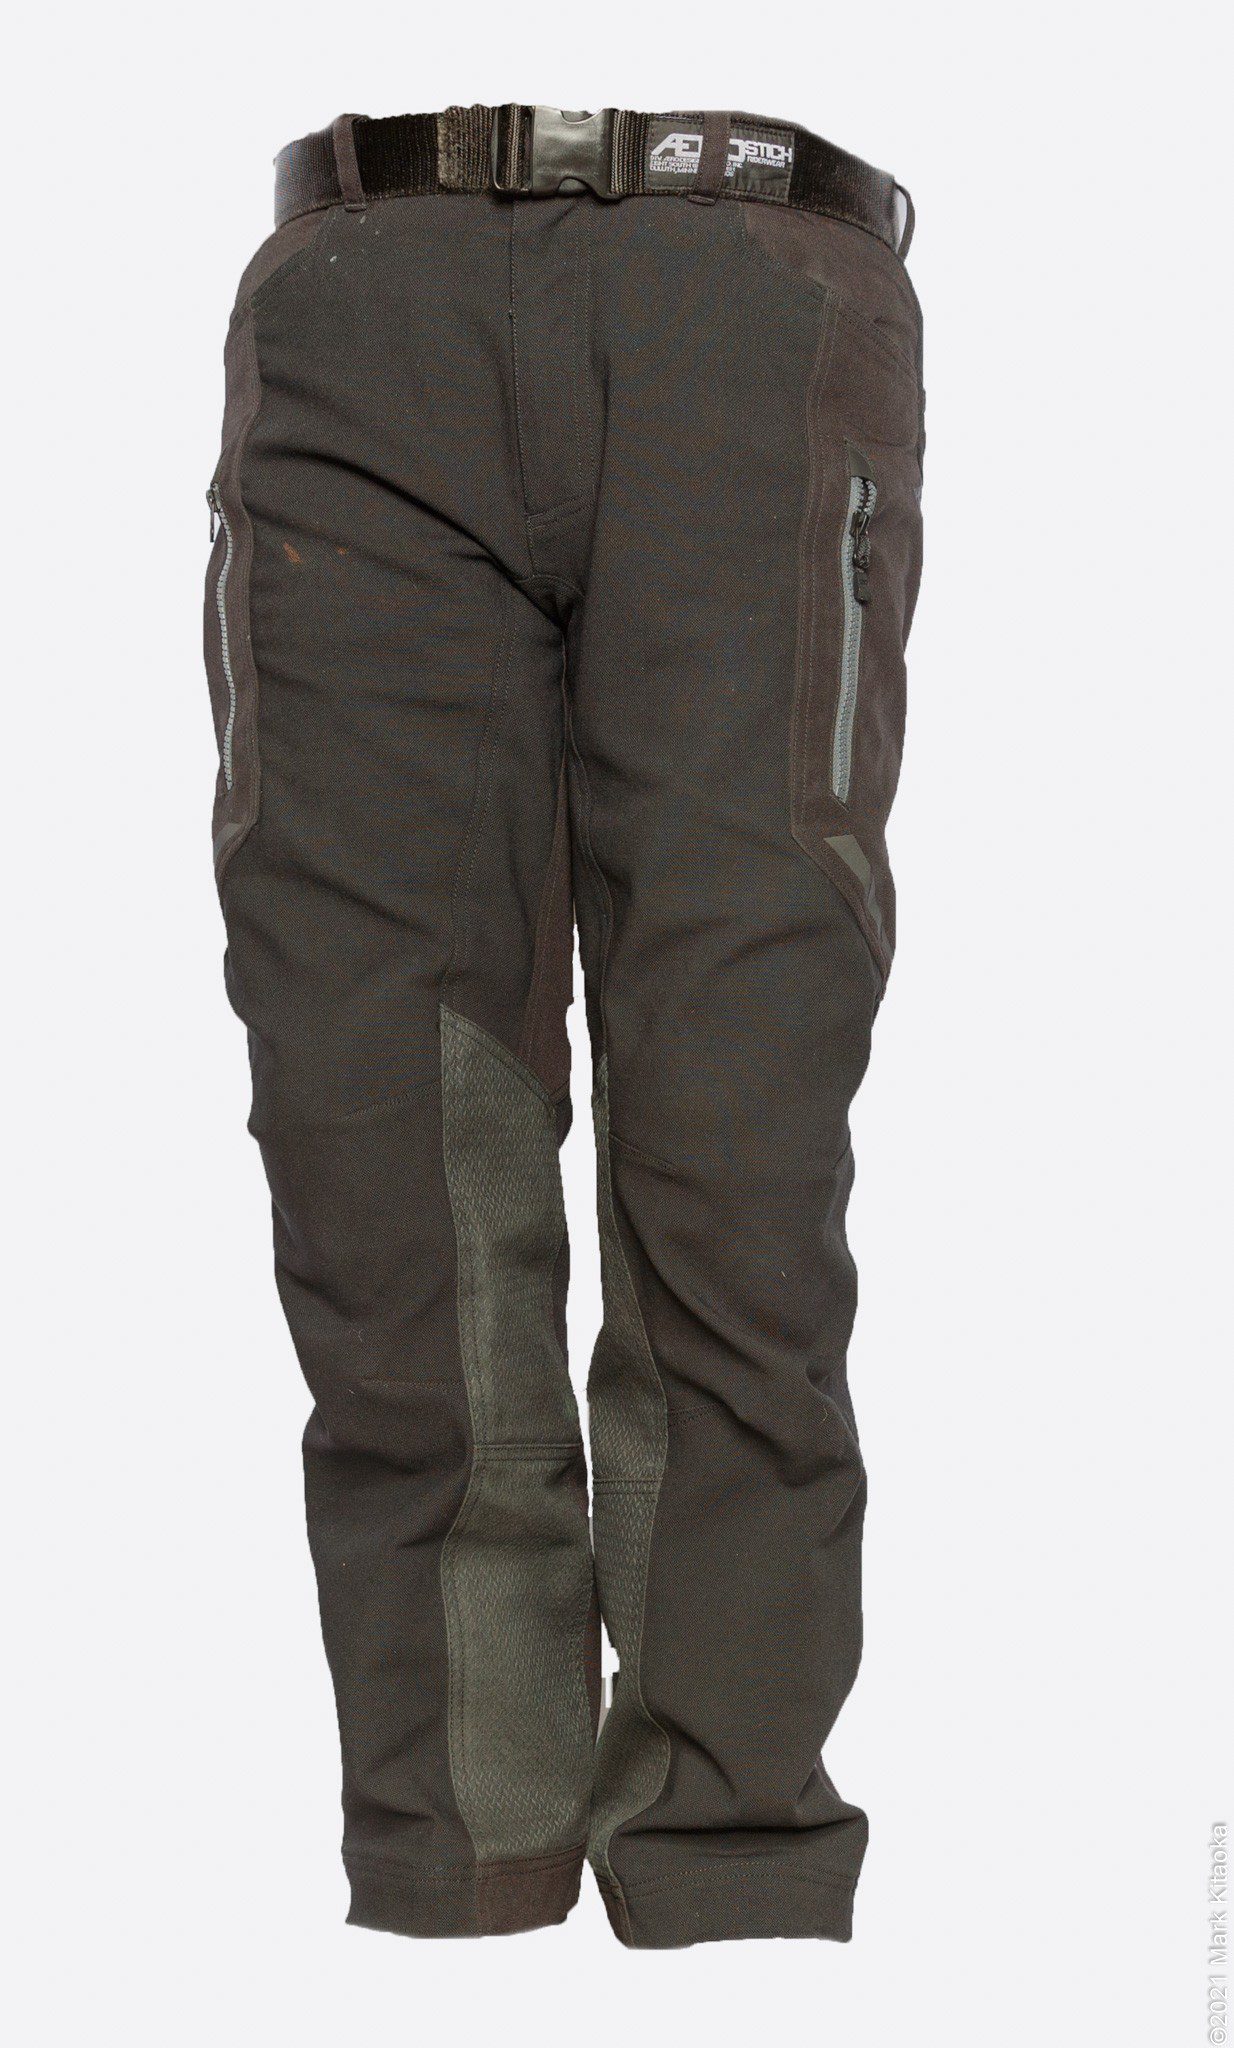 Front view of Klim Marrakesh pants